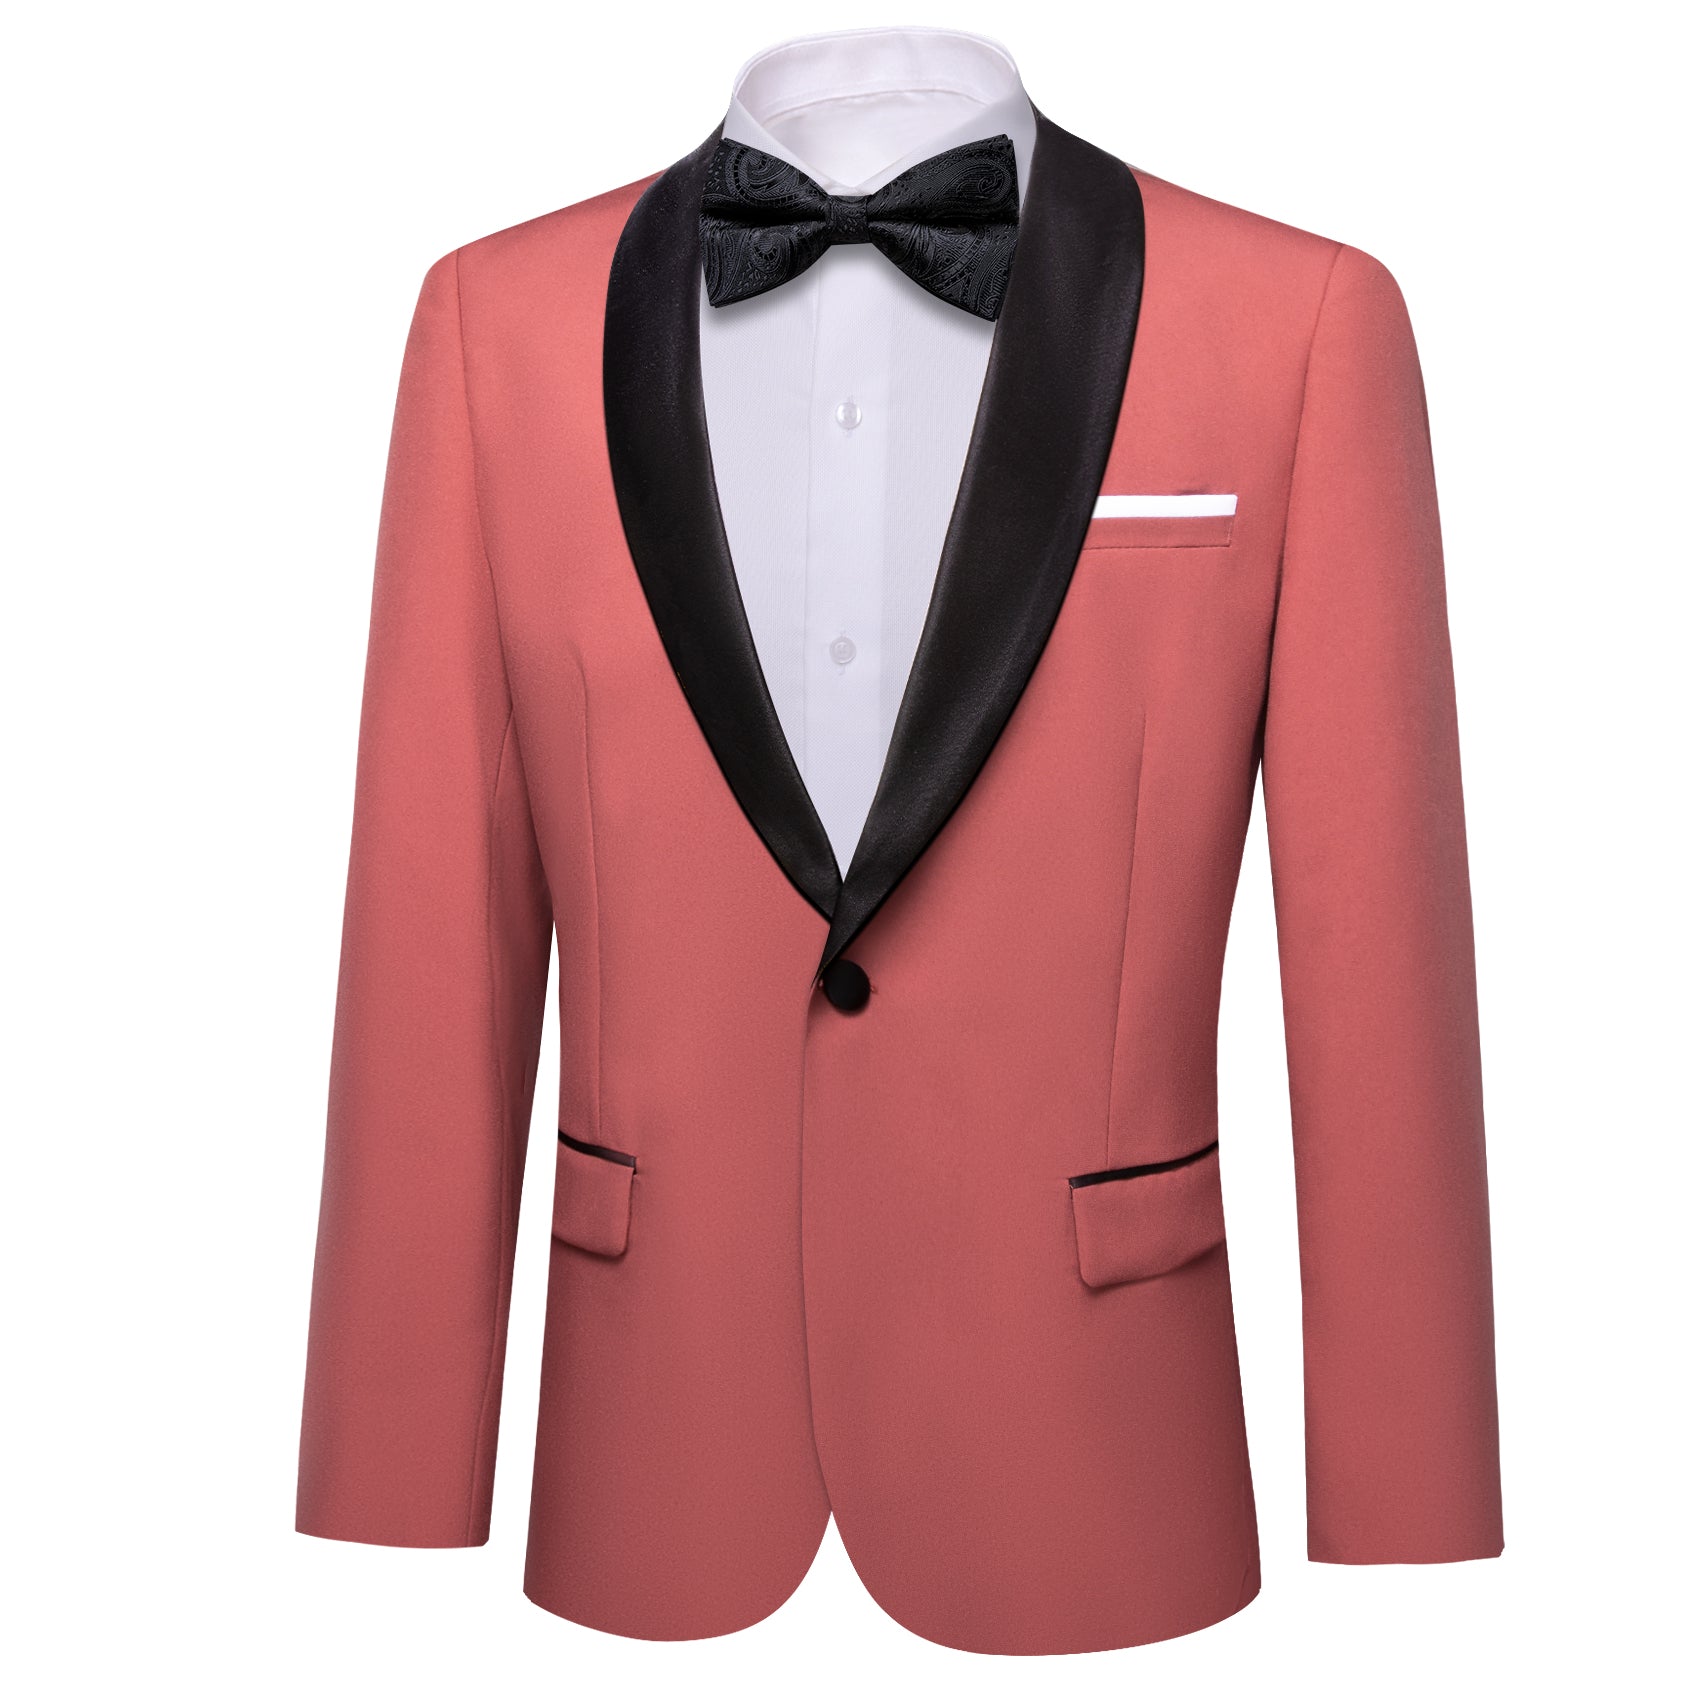 Men's Dress Light Coral Solid Suit Jacket Slim One Button Stylish Blazer